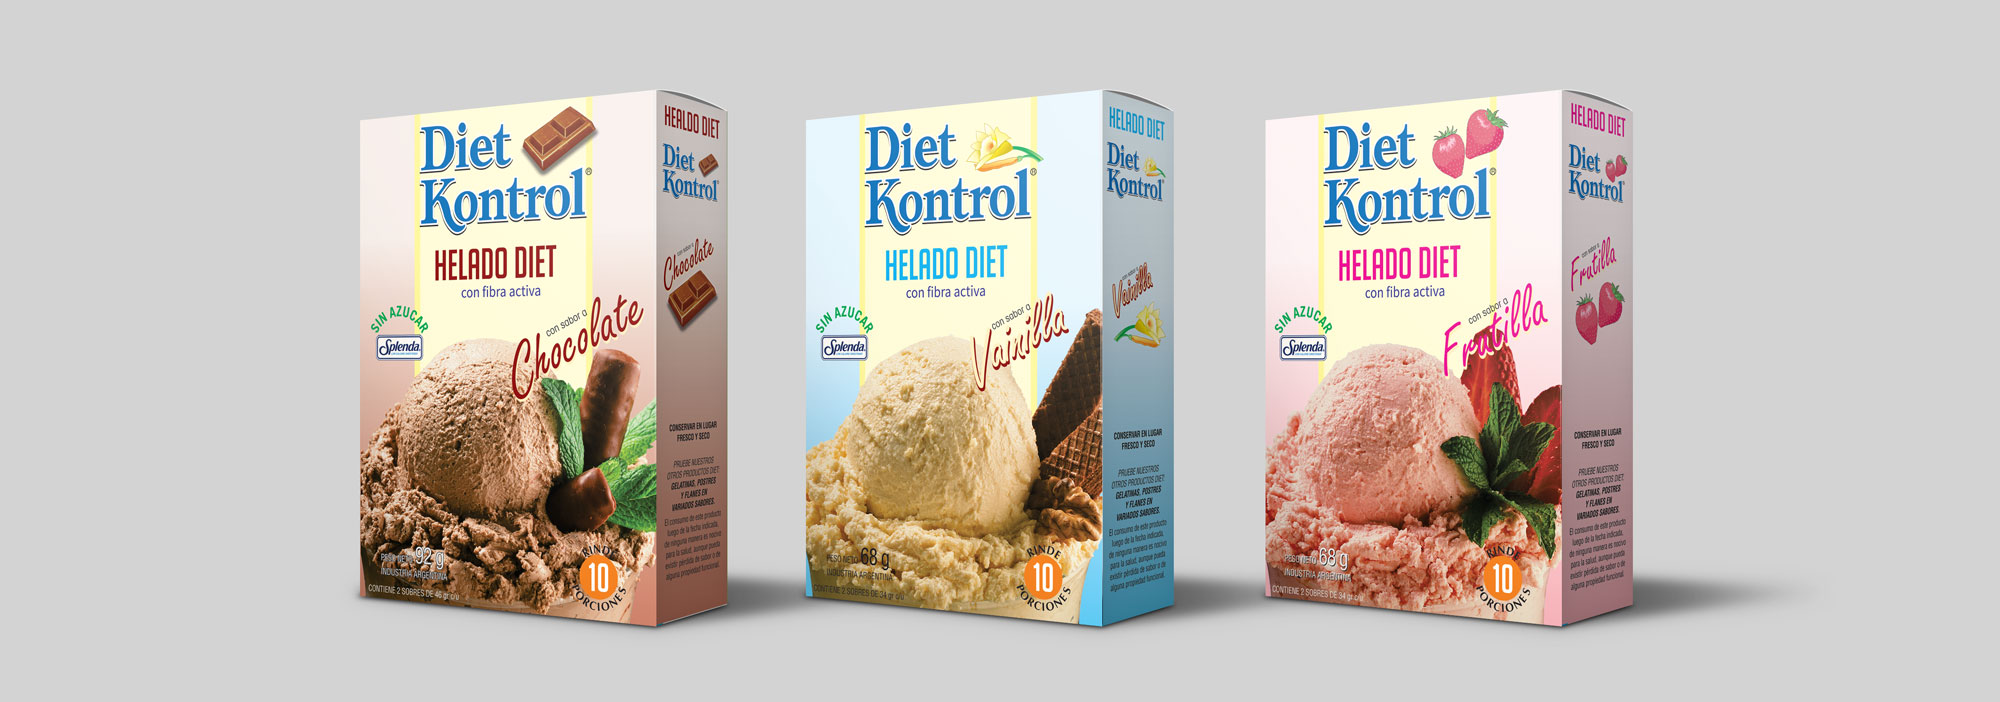 Carballo Design linea completa Diet Kontrol